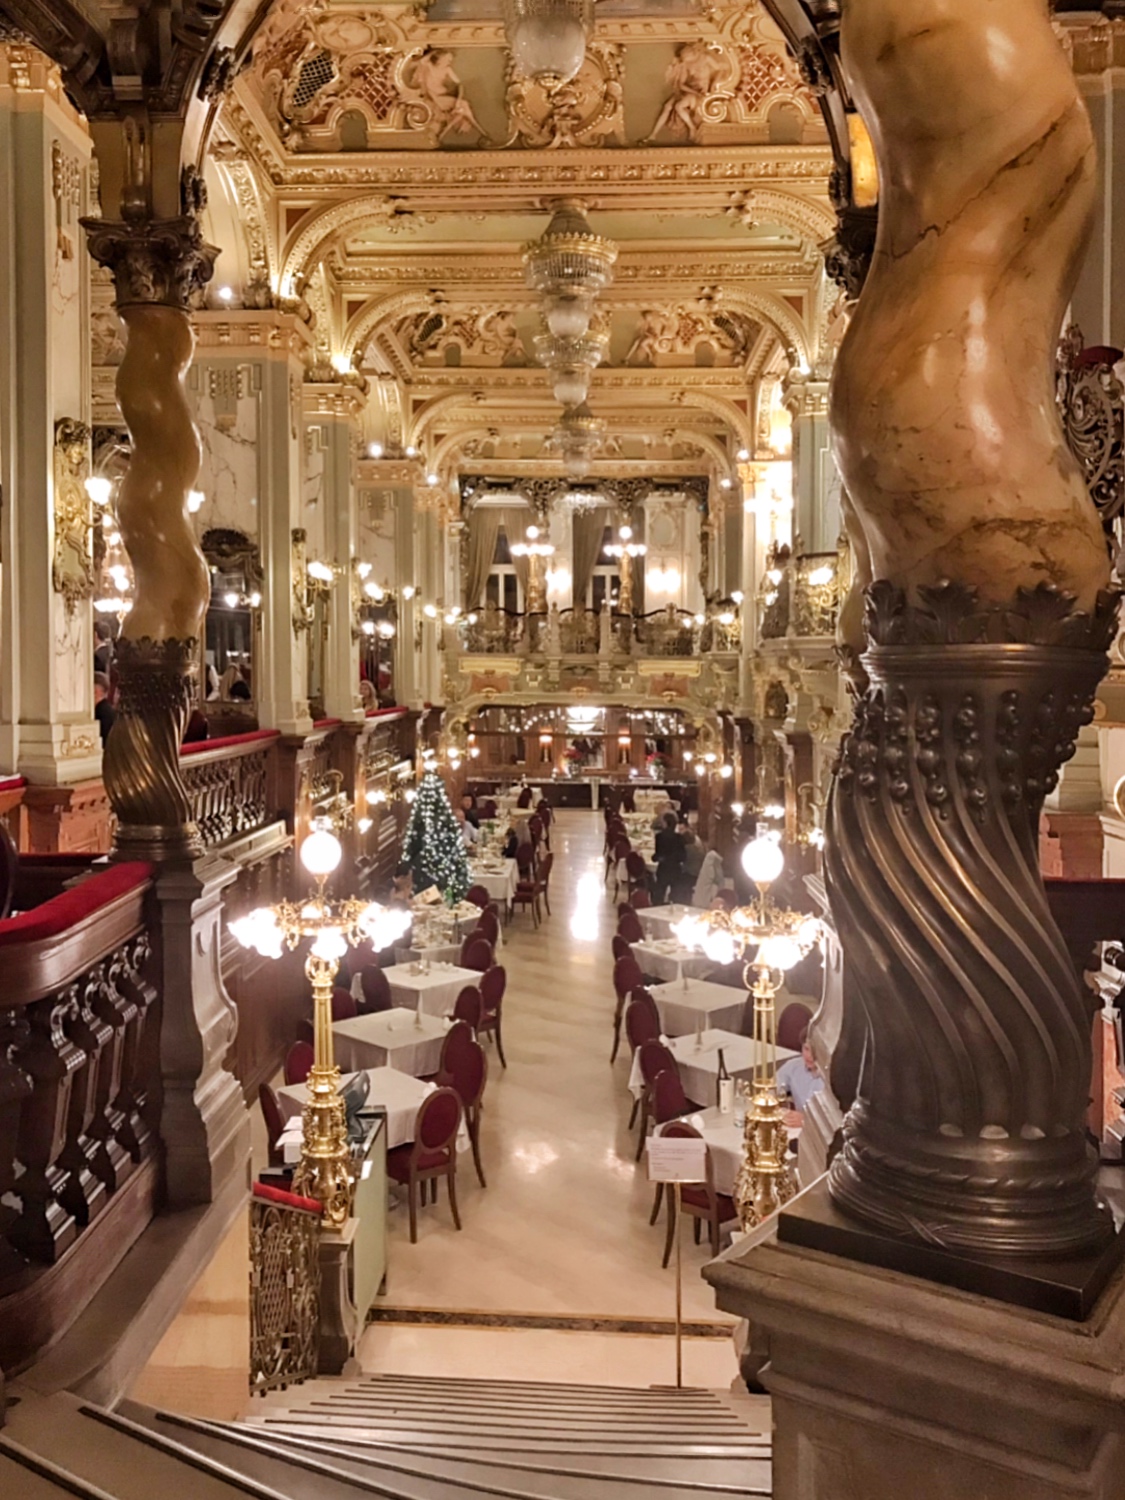 Interiors of New York Cafe Budapest